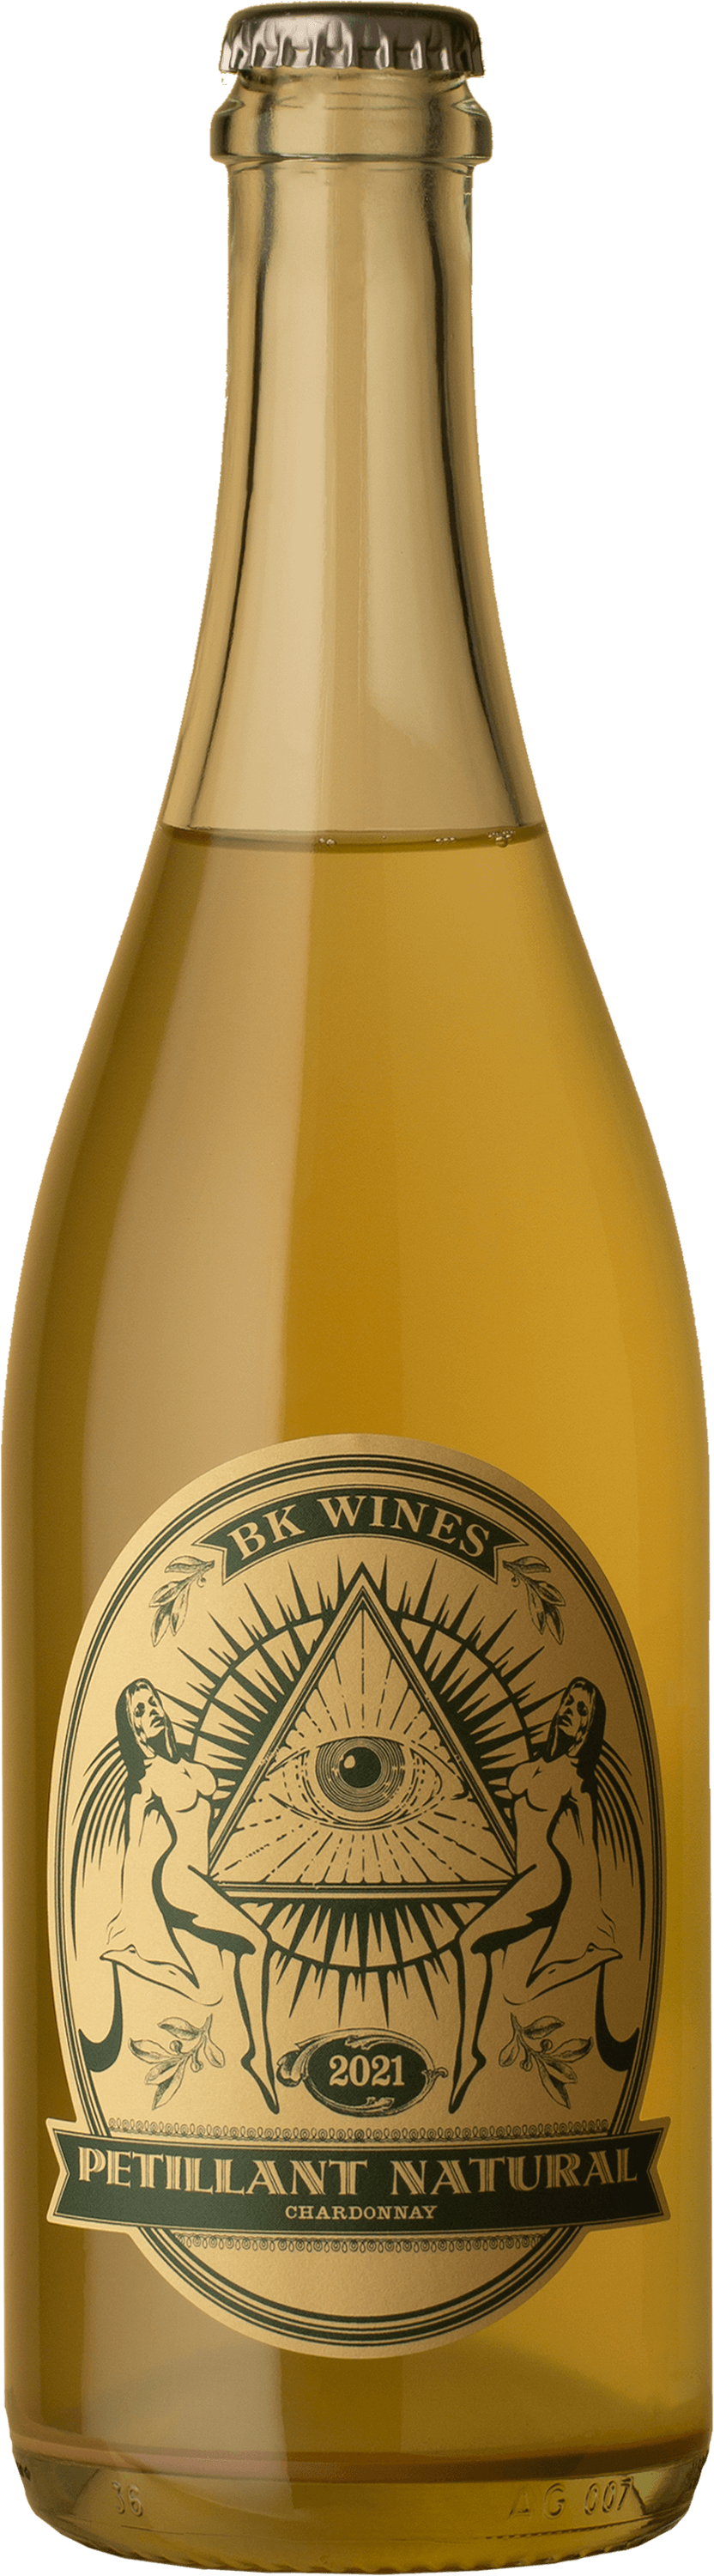 BK - Chardonnay Pétillant Naturel 2021 Sparkling Wine